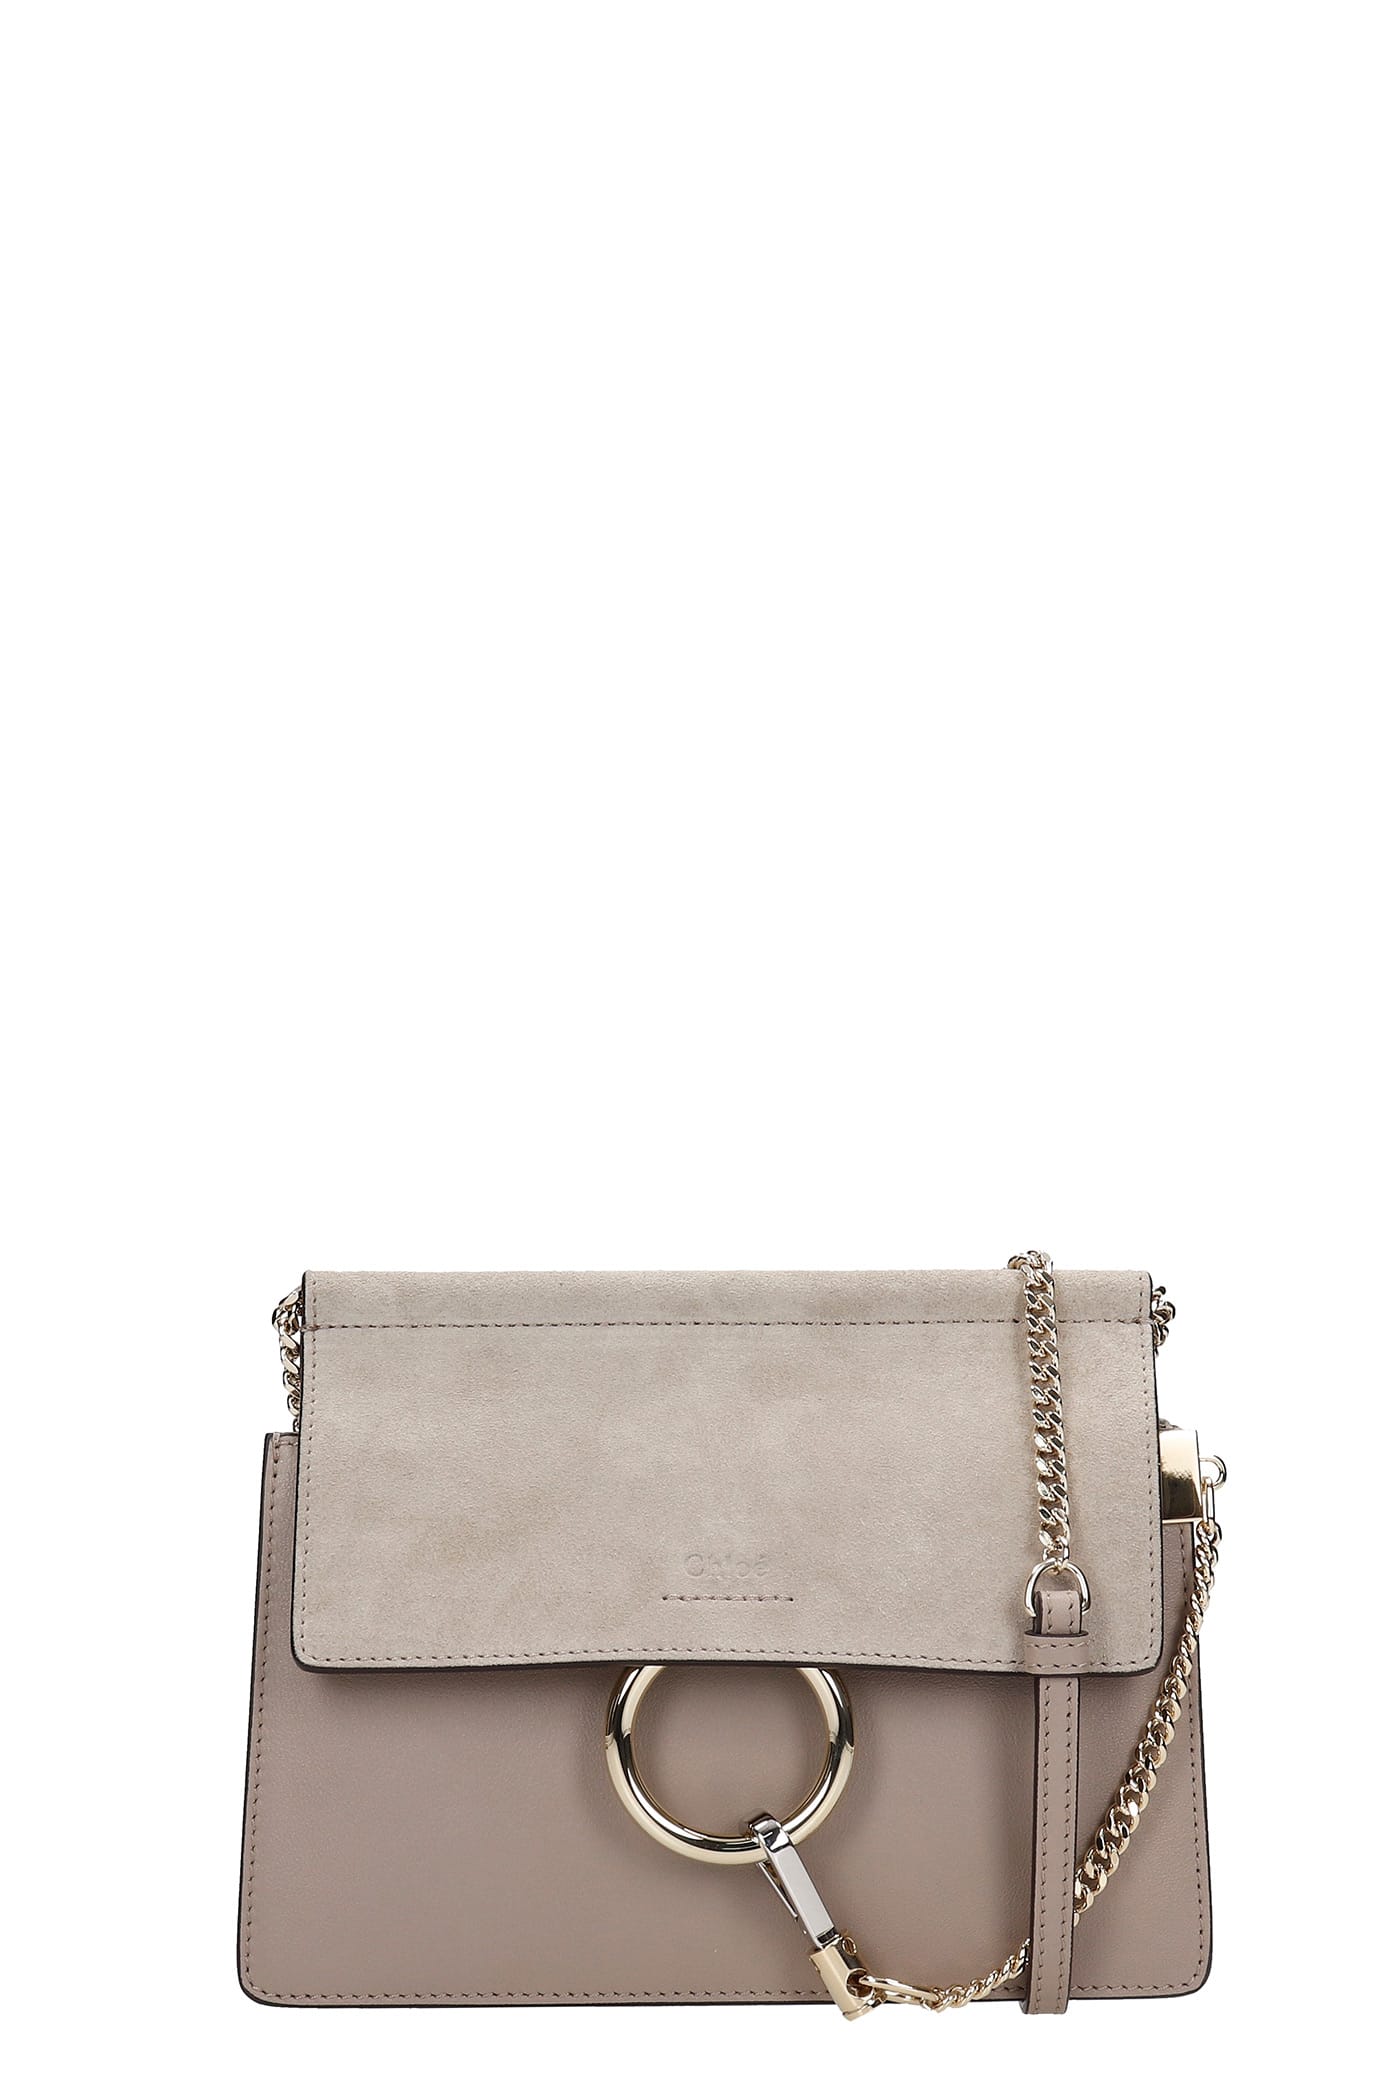 Chloé Faye Mini Shoulder Bag In Grey Suede